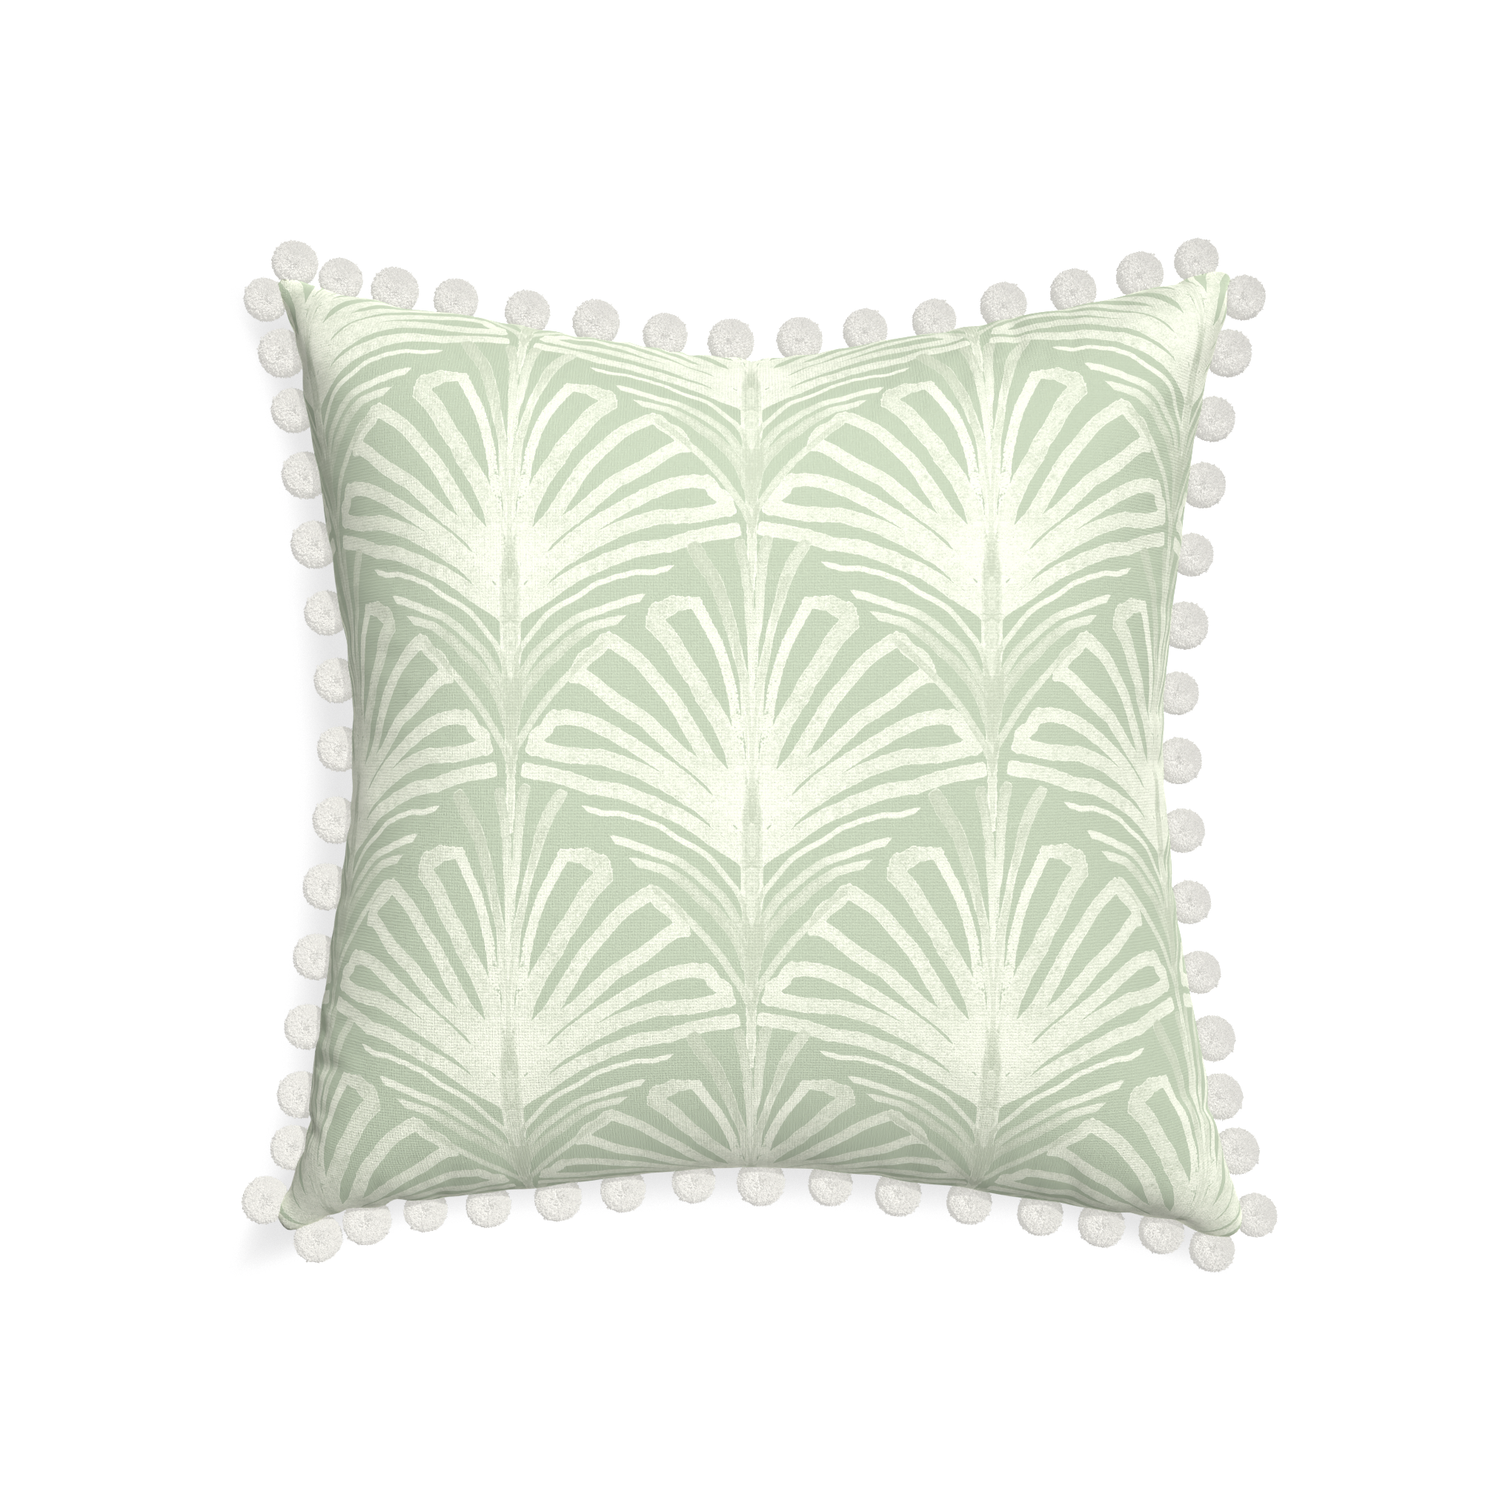 22-square suzy sage custom pillow with snow pom pom on white background